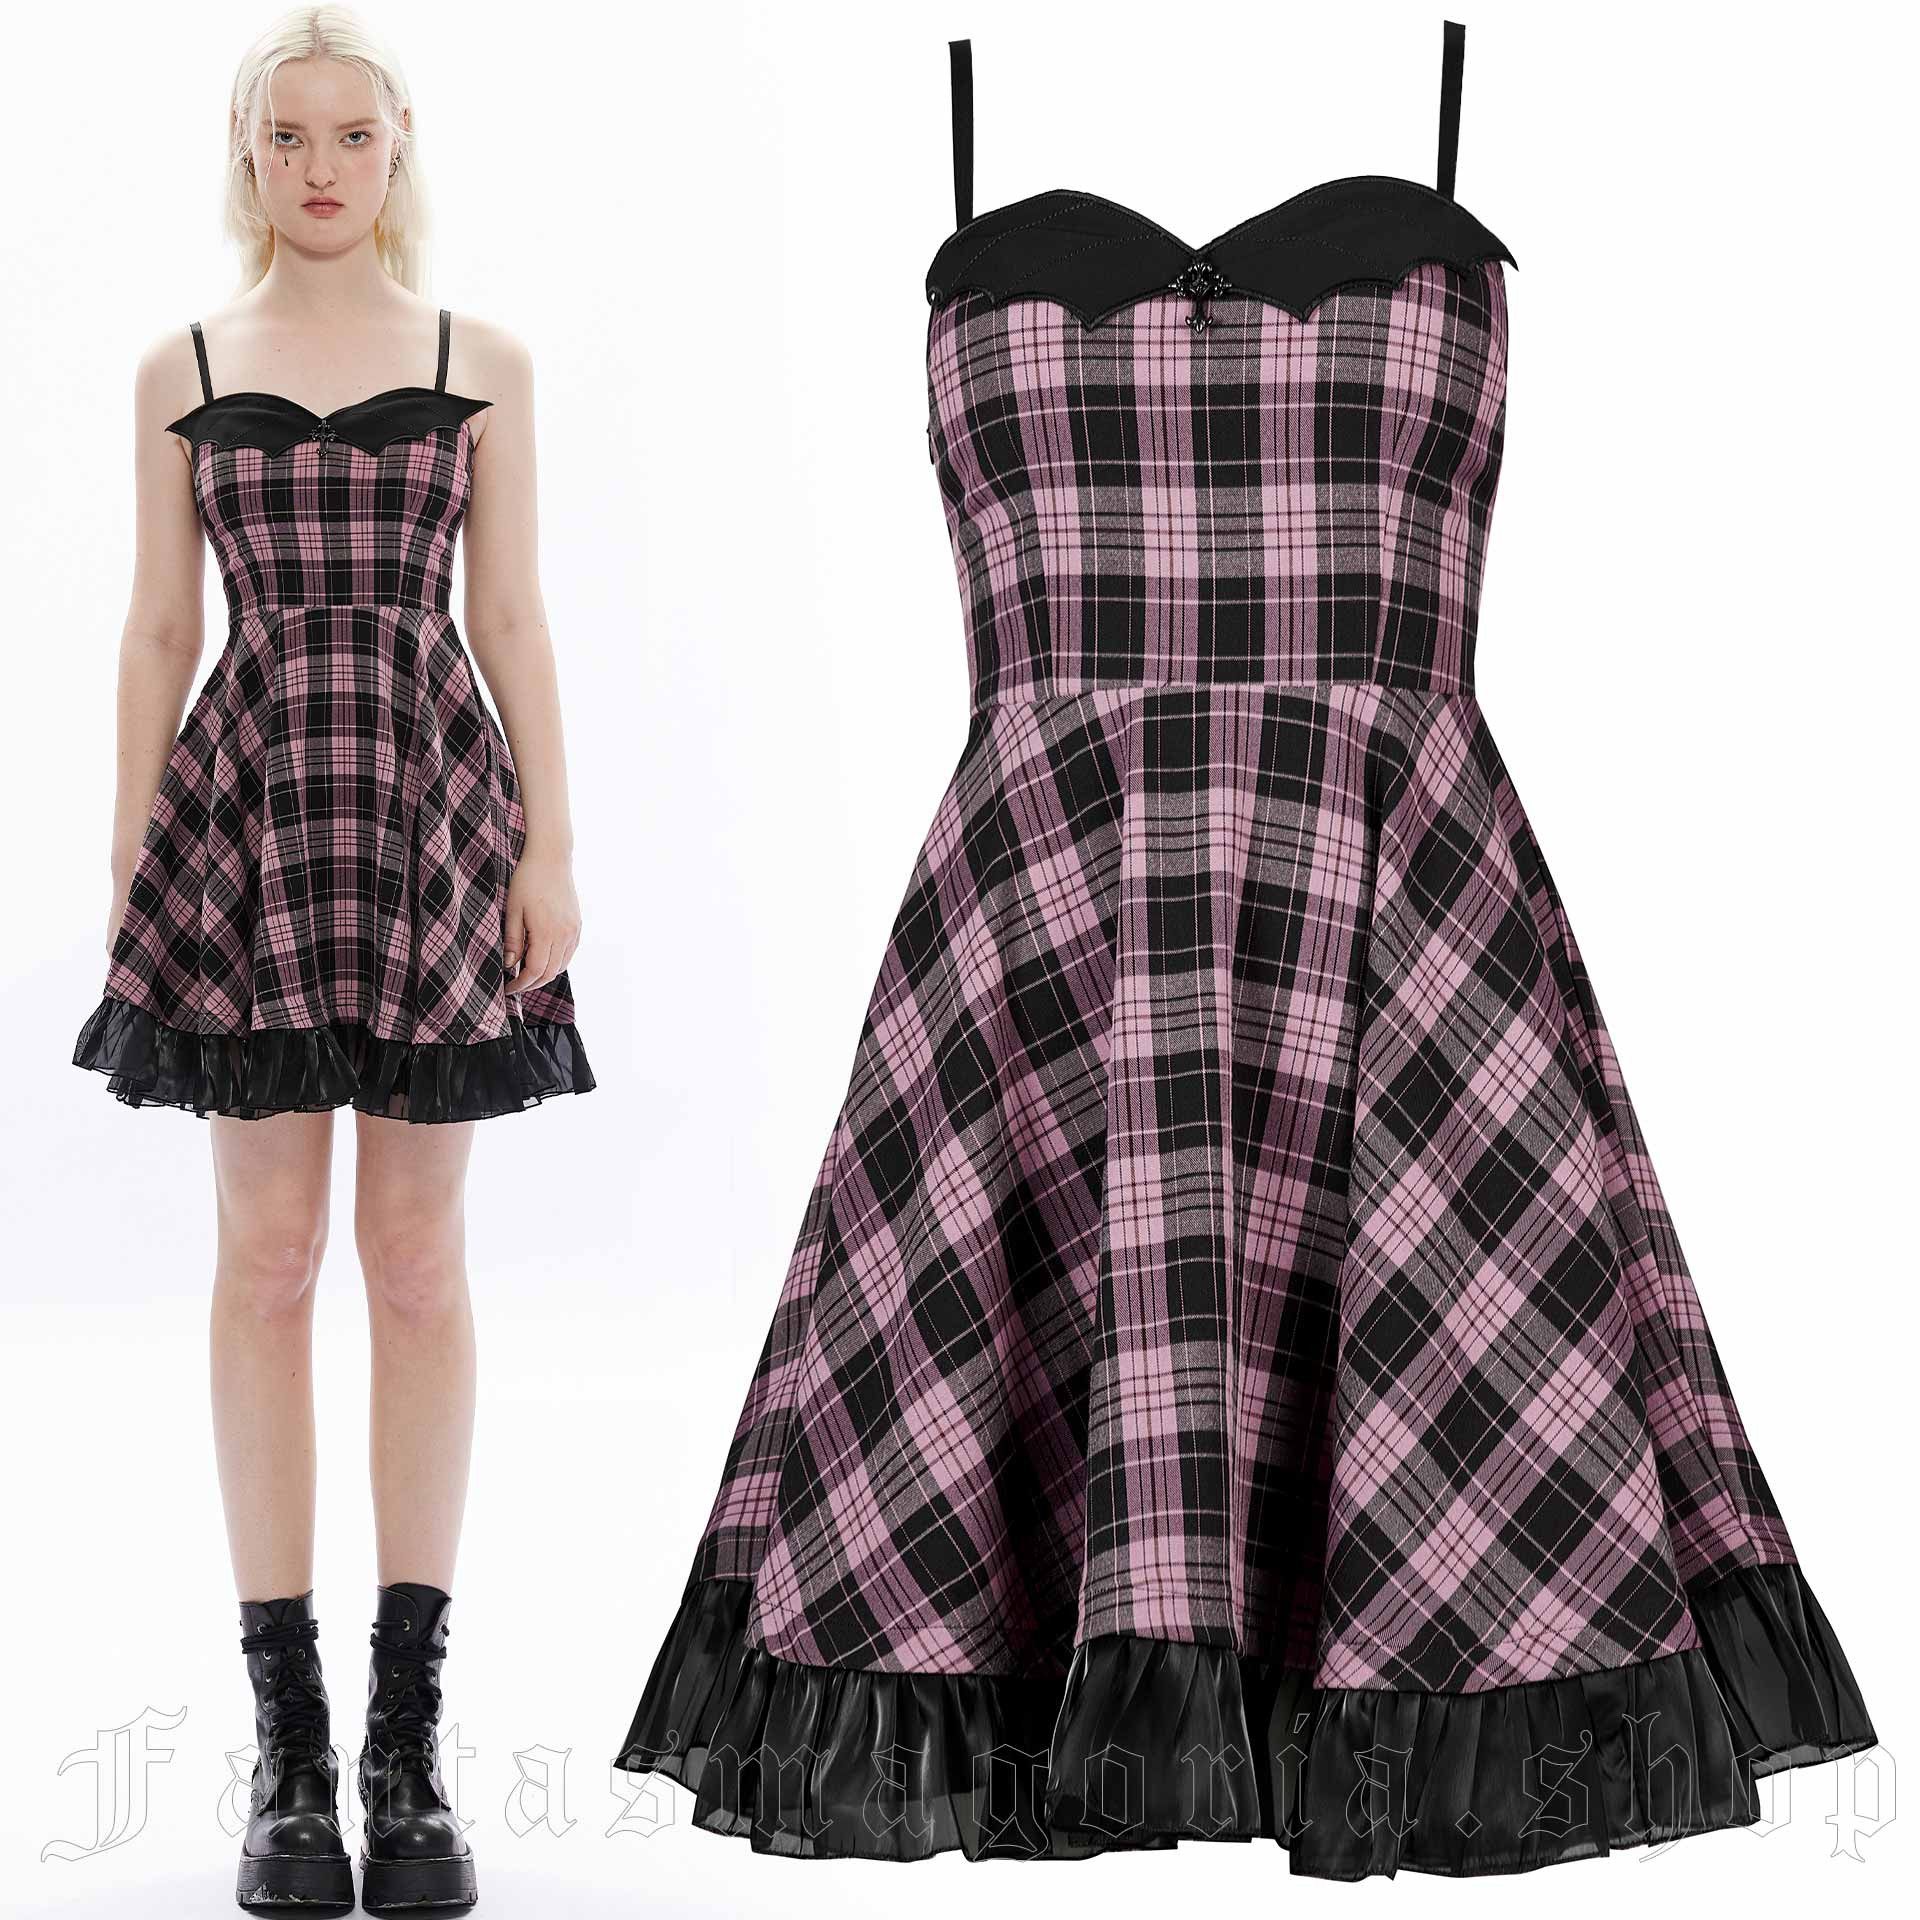 Women`s romantic gothic short dress.